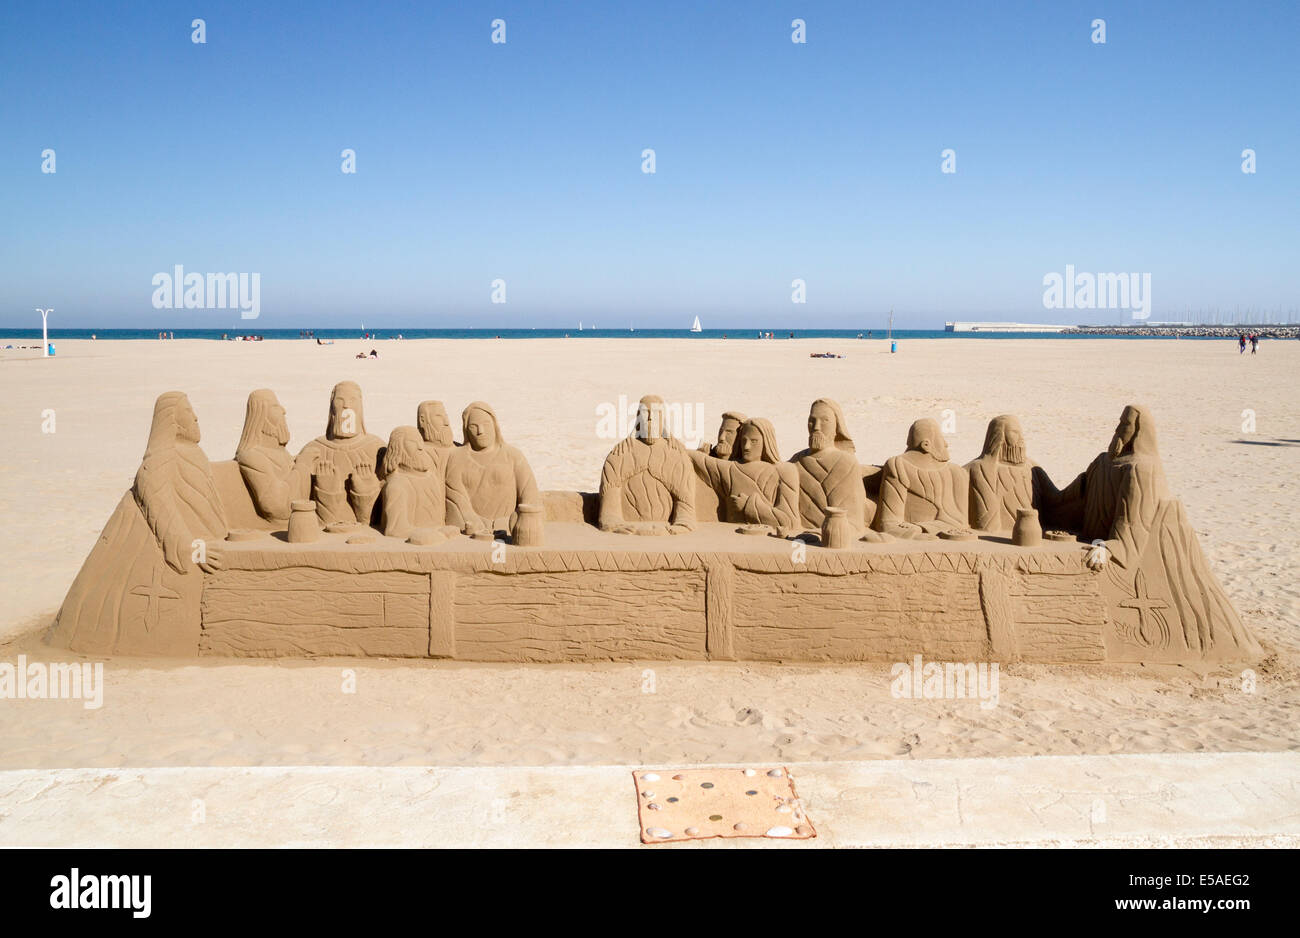 A sand sculpture on a Valencia beach in Spain Stock Photo - Alamy